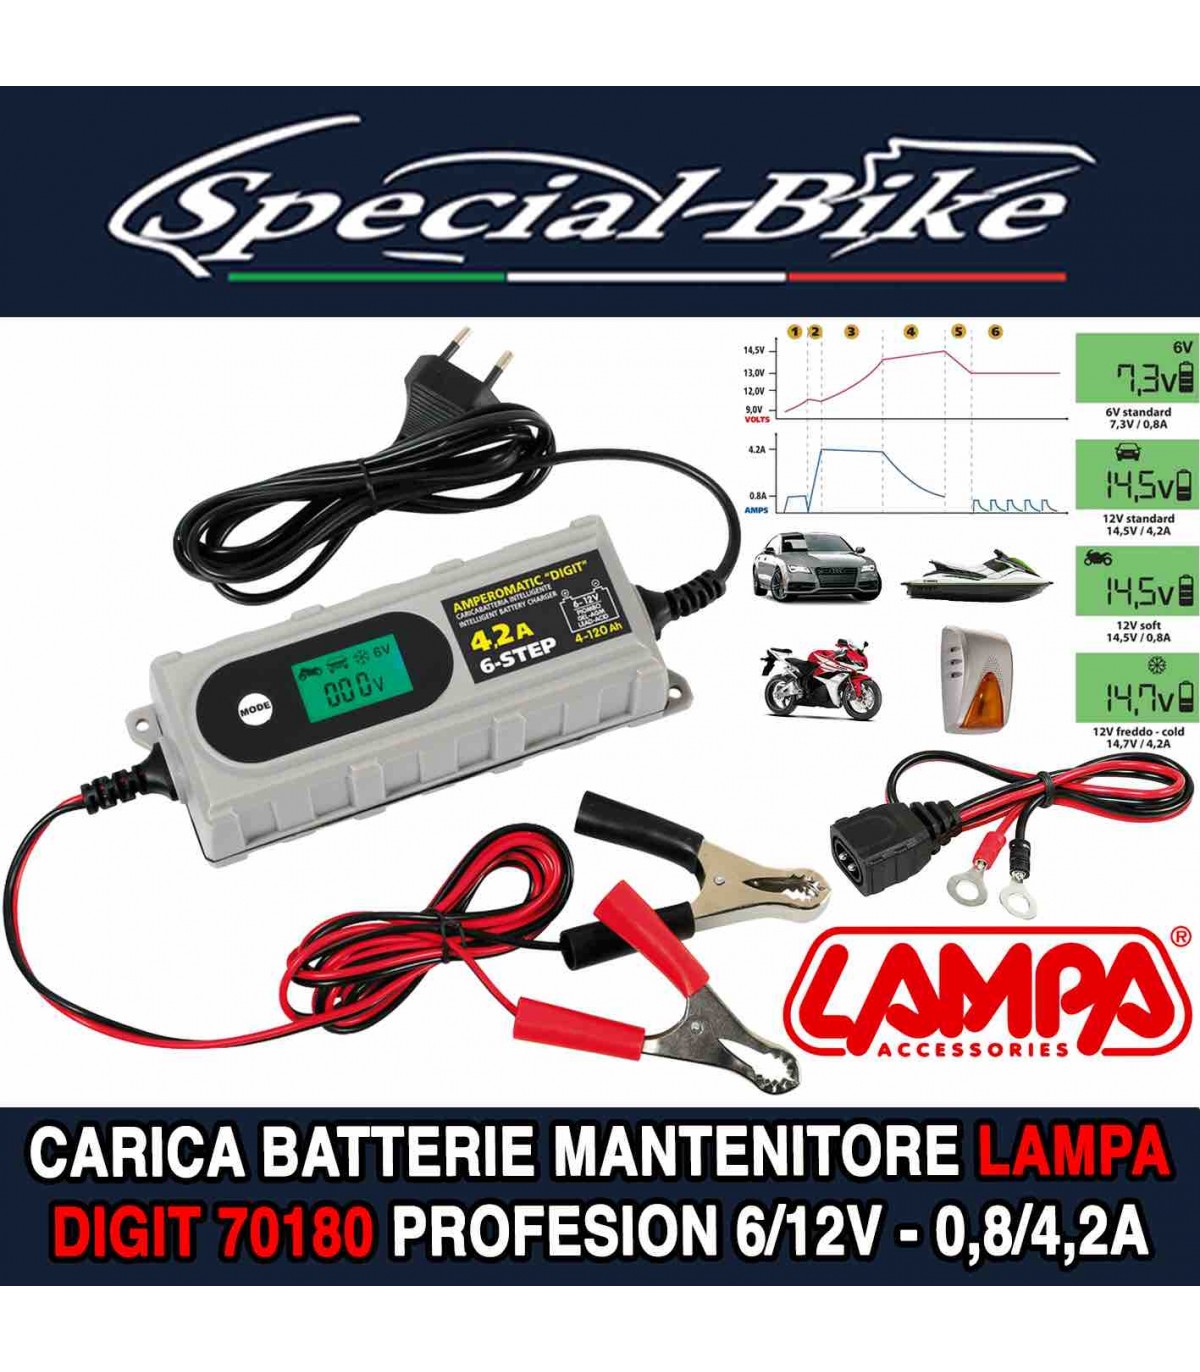 Carica Batterie Mantenitore LAMPA DIGIT 70180 PROFESION 6/12V - 0